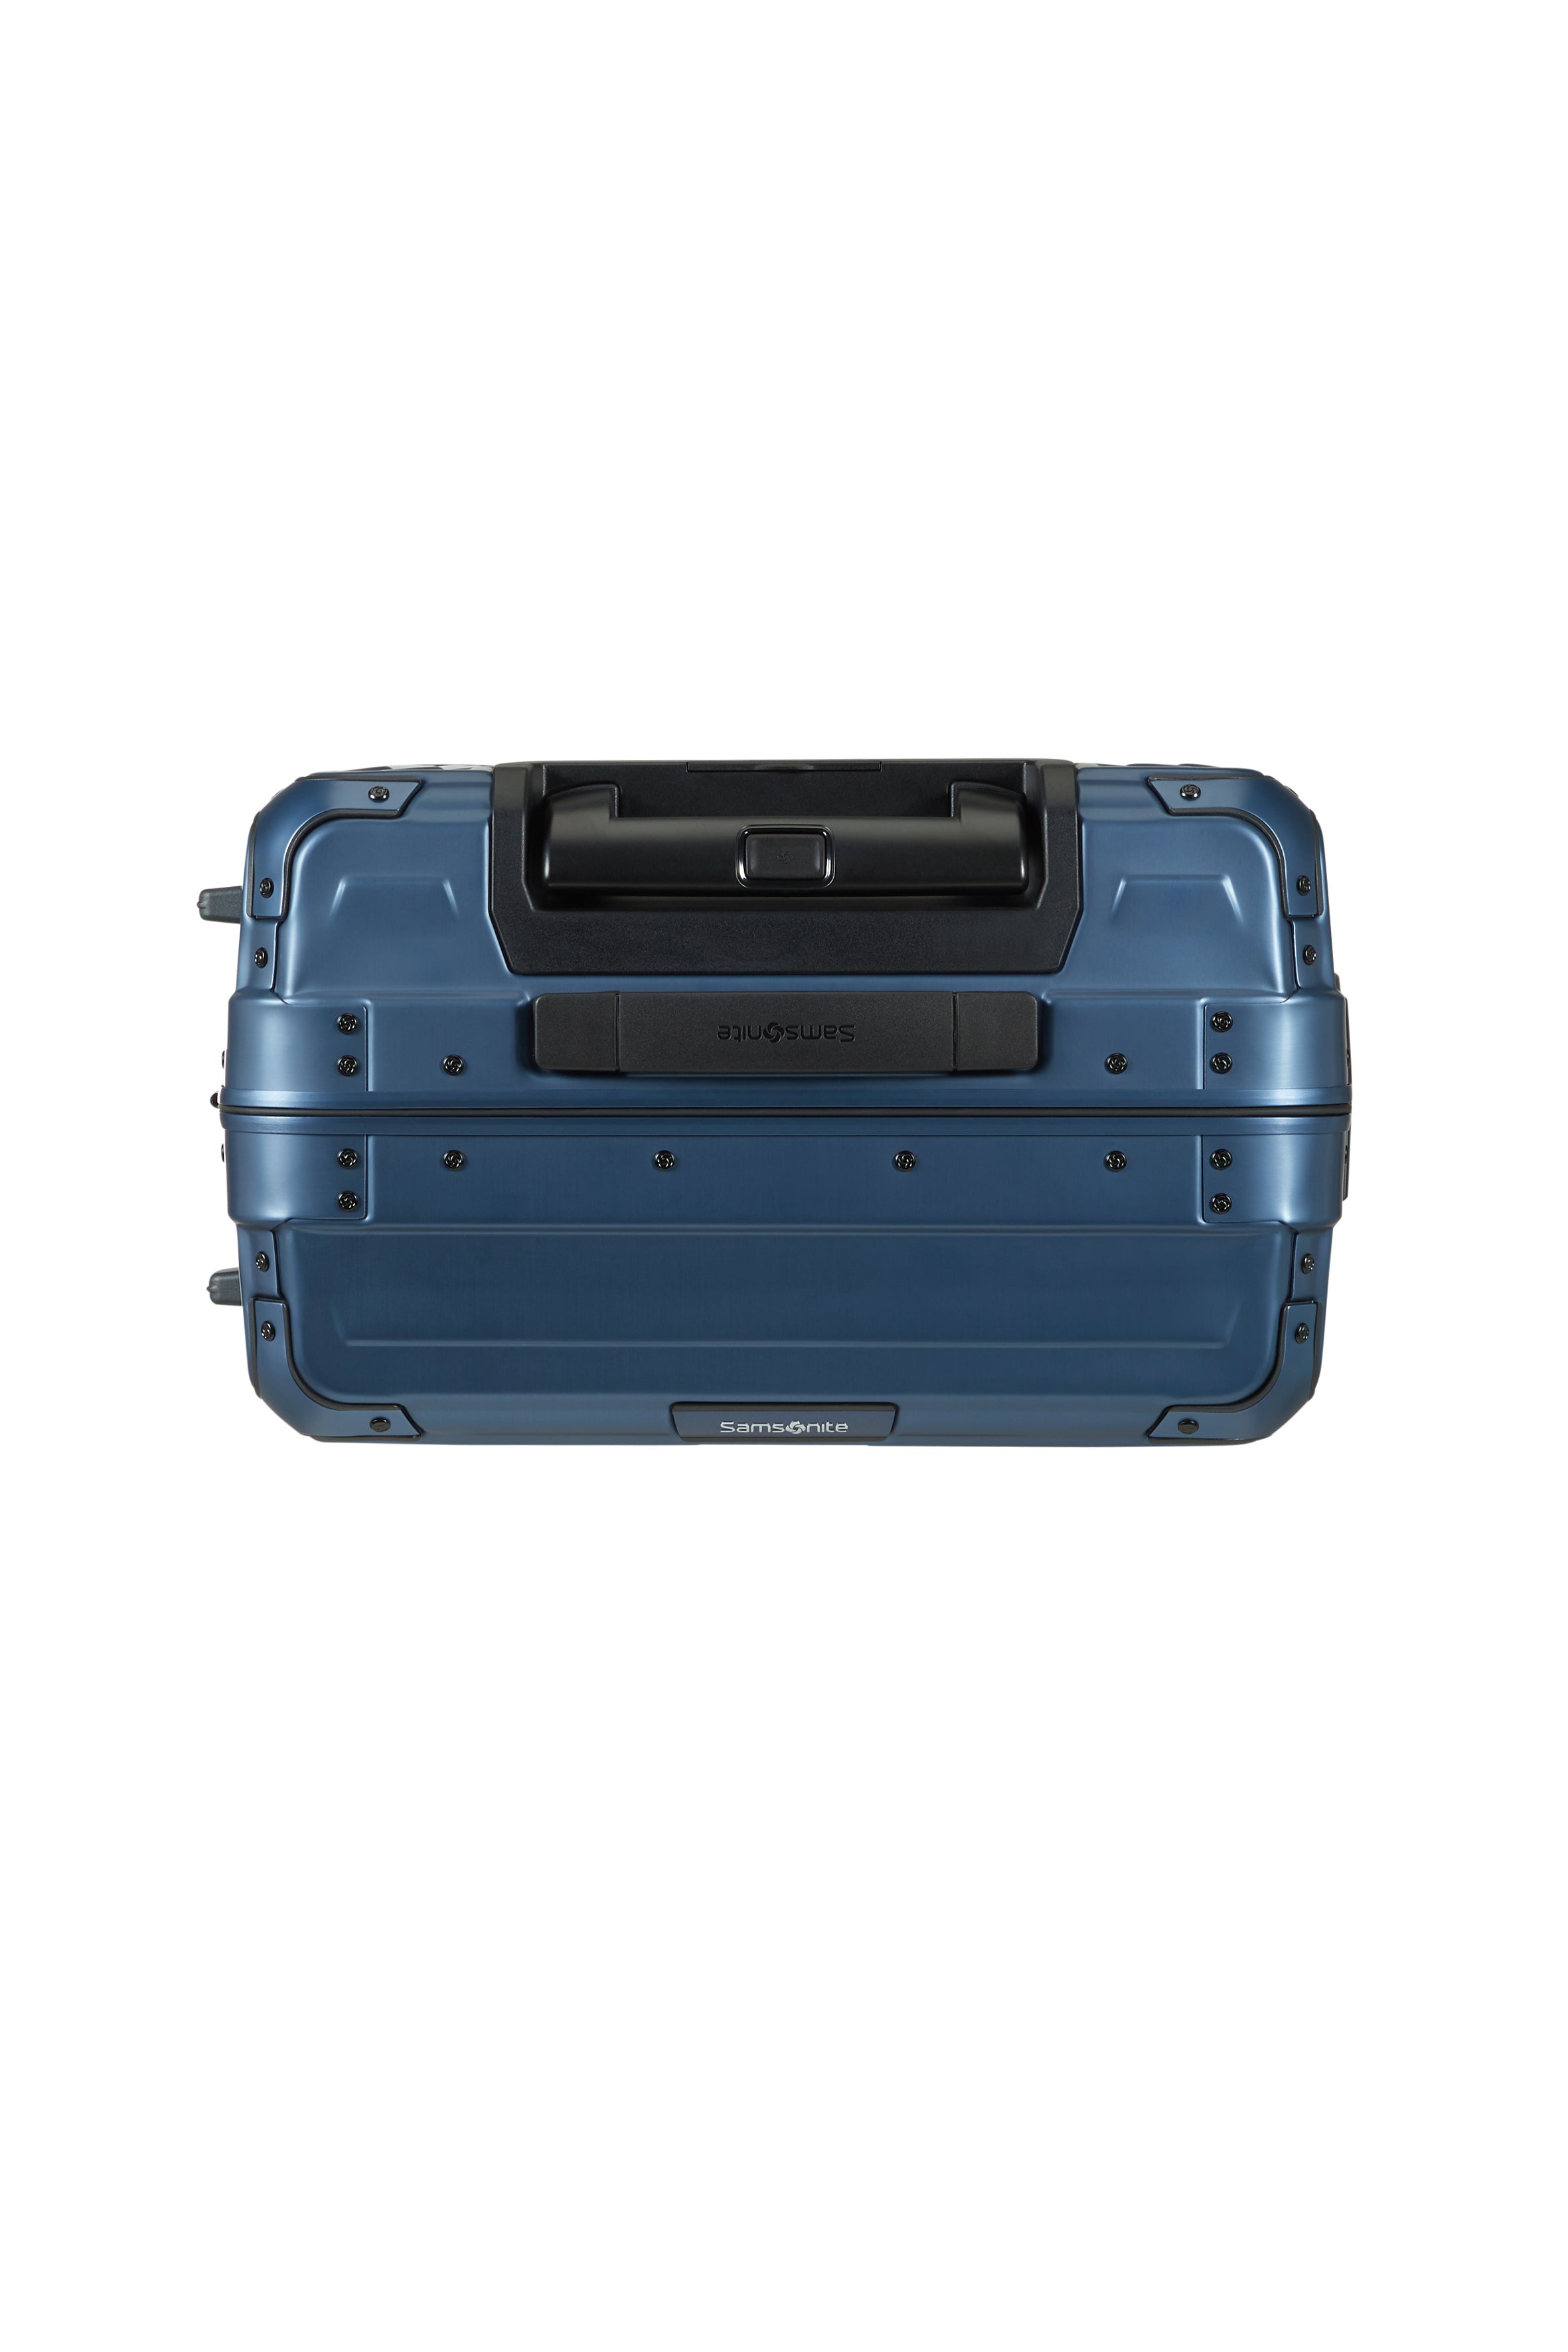 Samsonite - Lite Box ALU 55cm Small 4 Wheel Hard Suitcase - Gradient Midnight-9